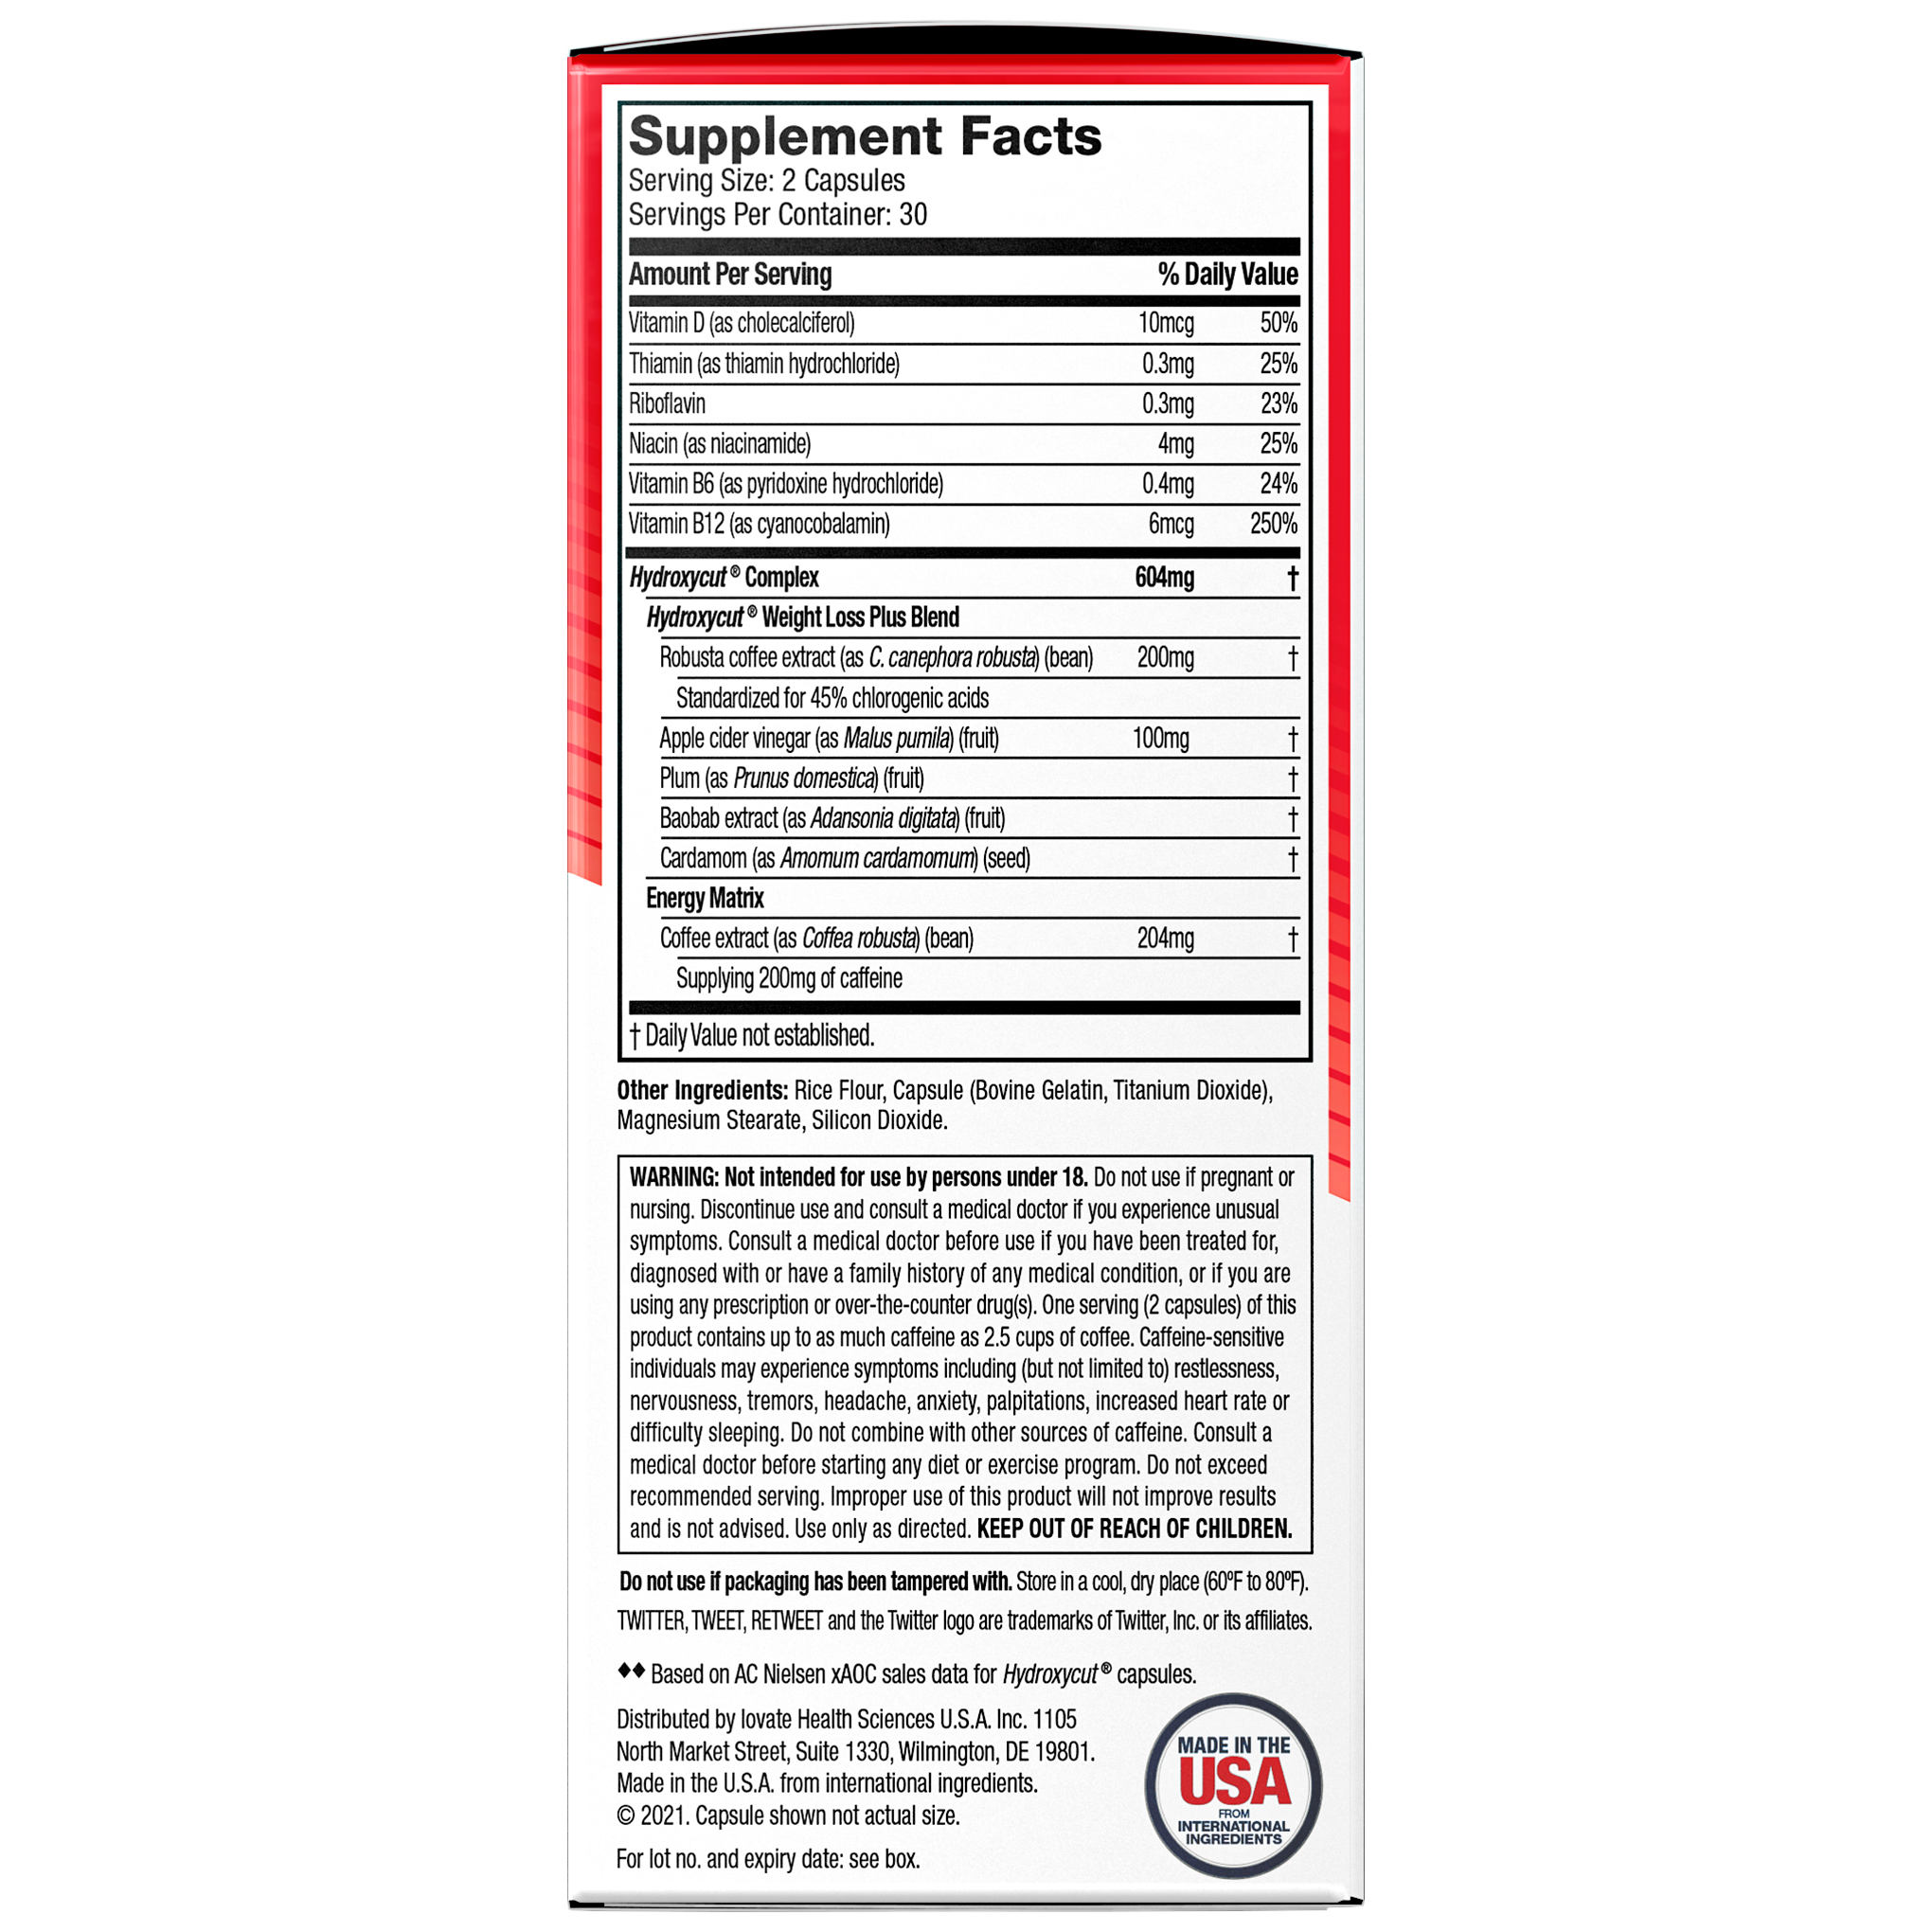 Hydroxycut Original Weight Loss Supplement Pills with Apple Cider Vinegar, 200 mg Caffeine, 60 Ct - image 4 of 8